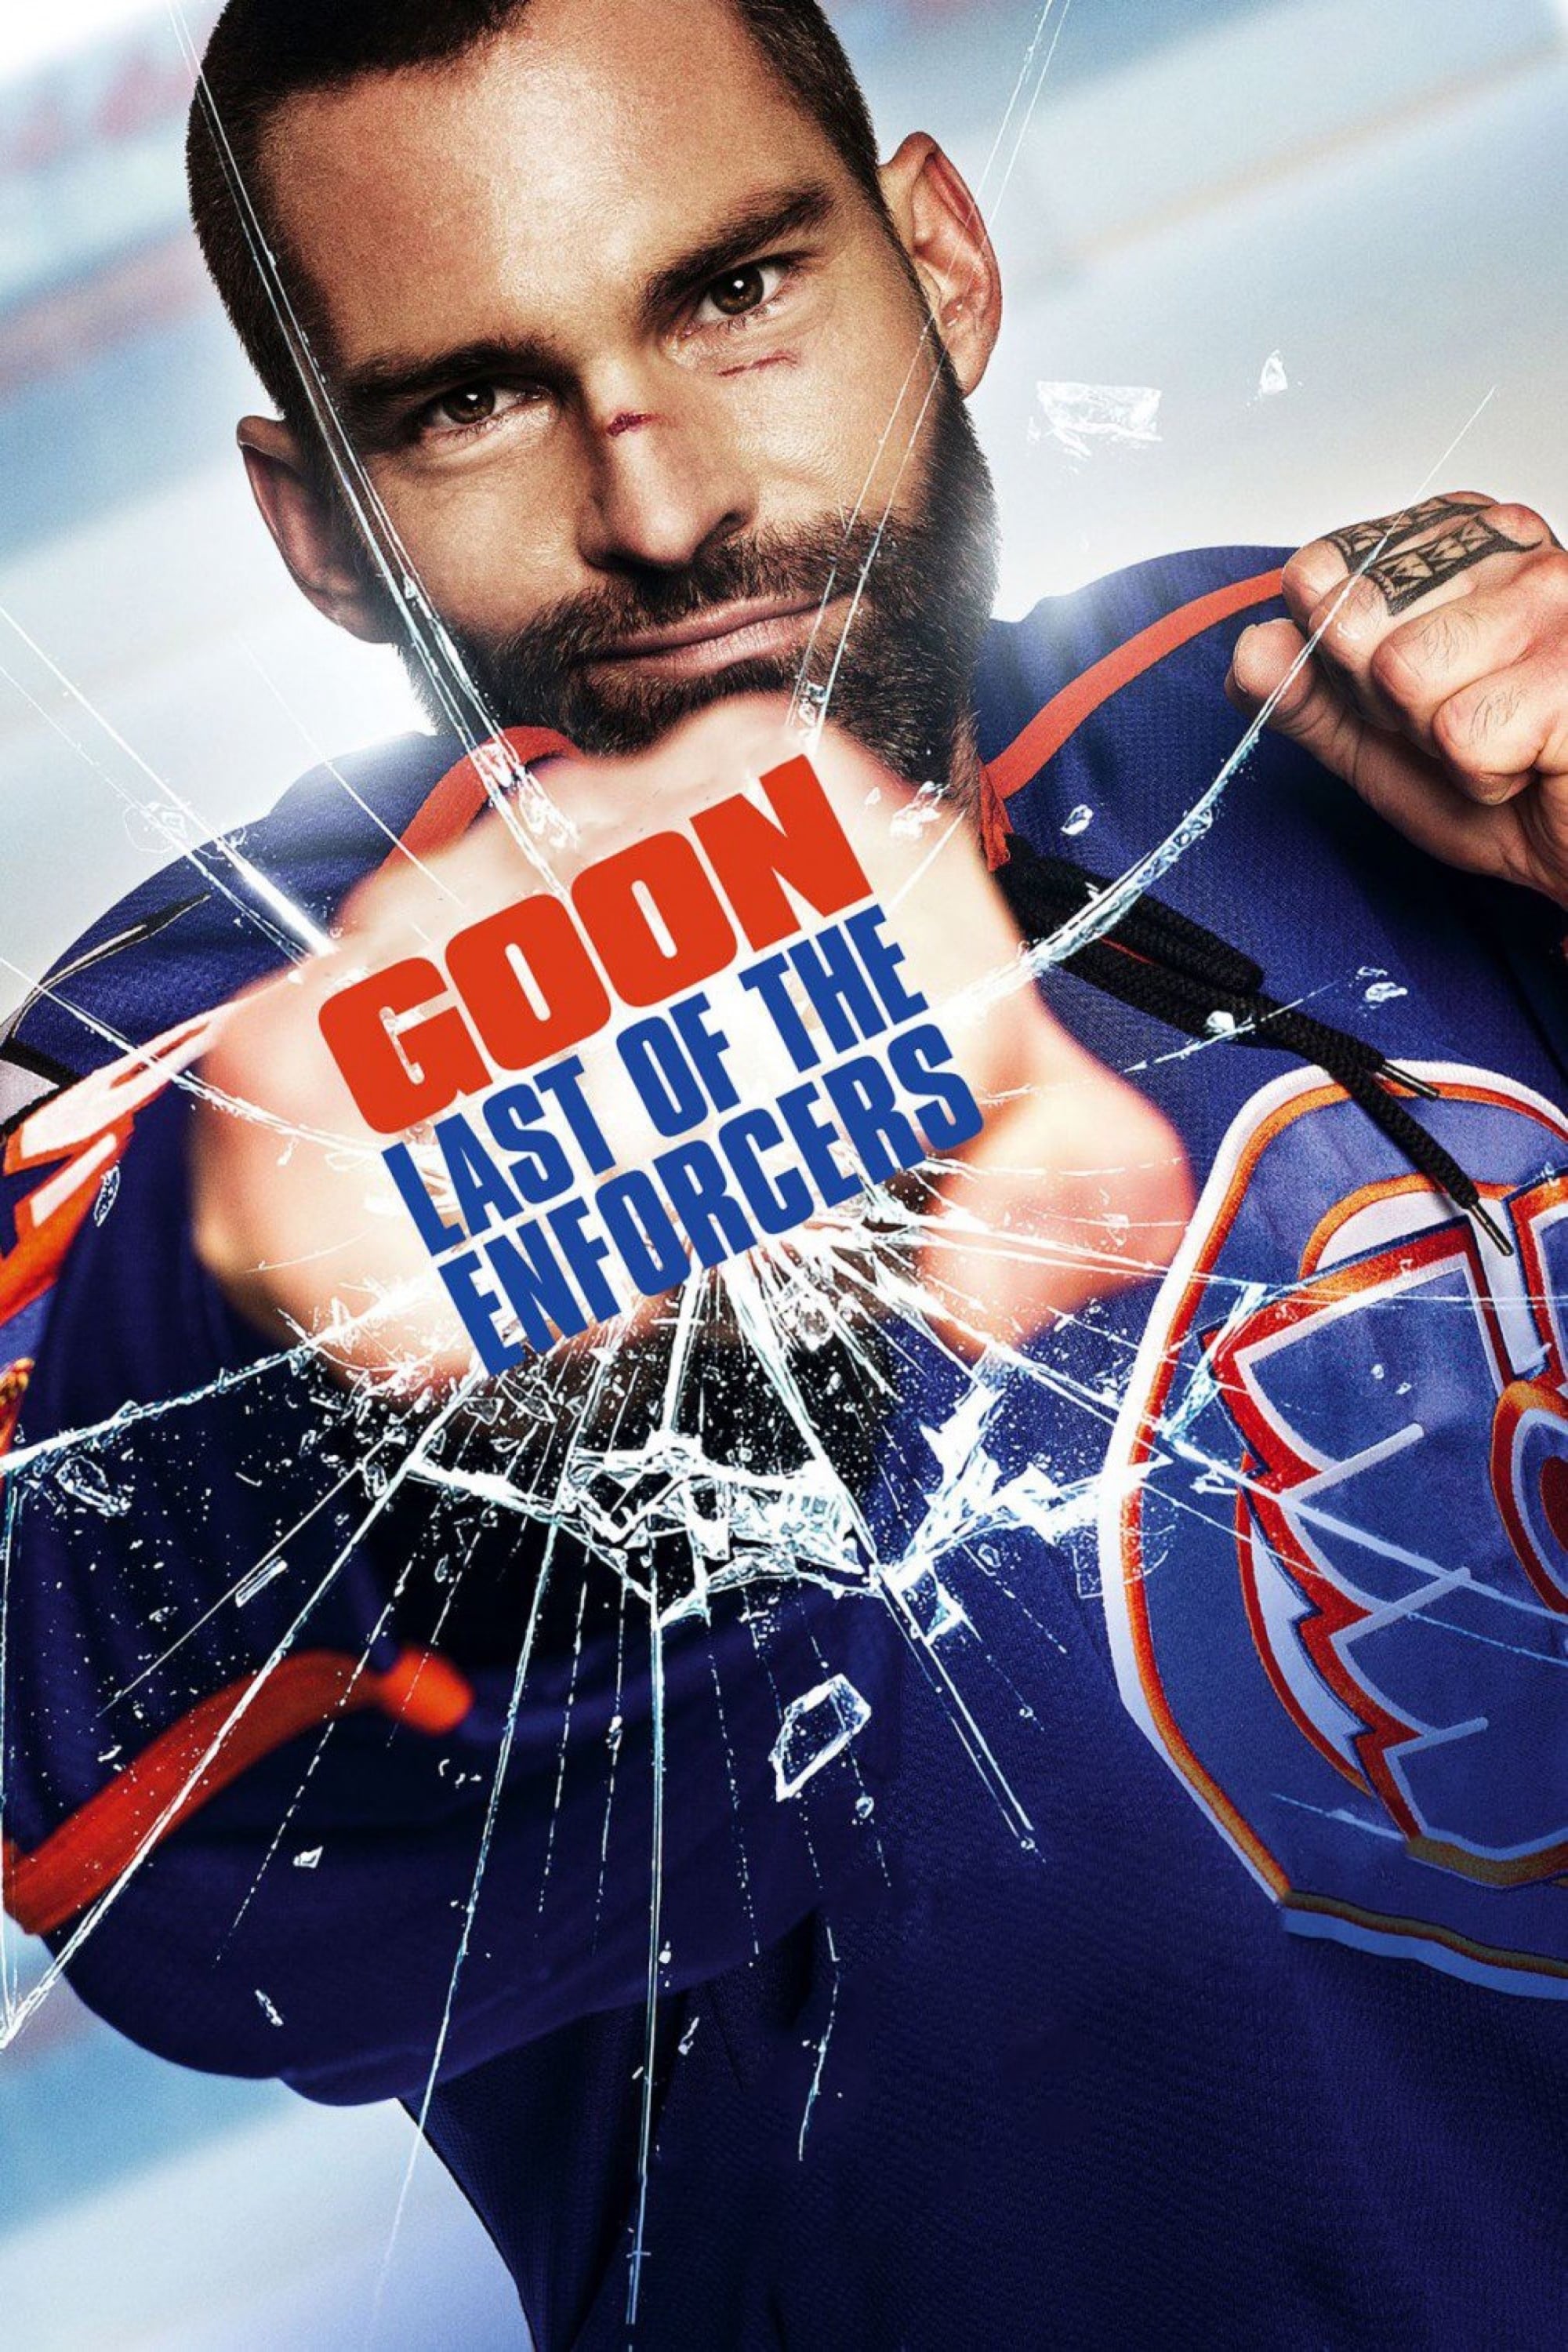 Plakat von "Goon: Last of the Enforcers"